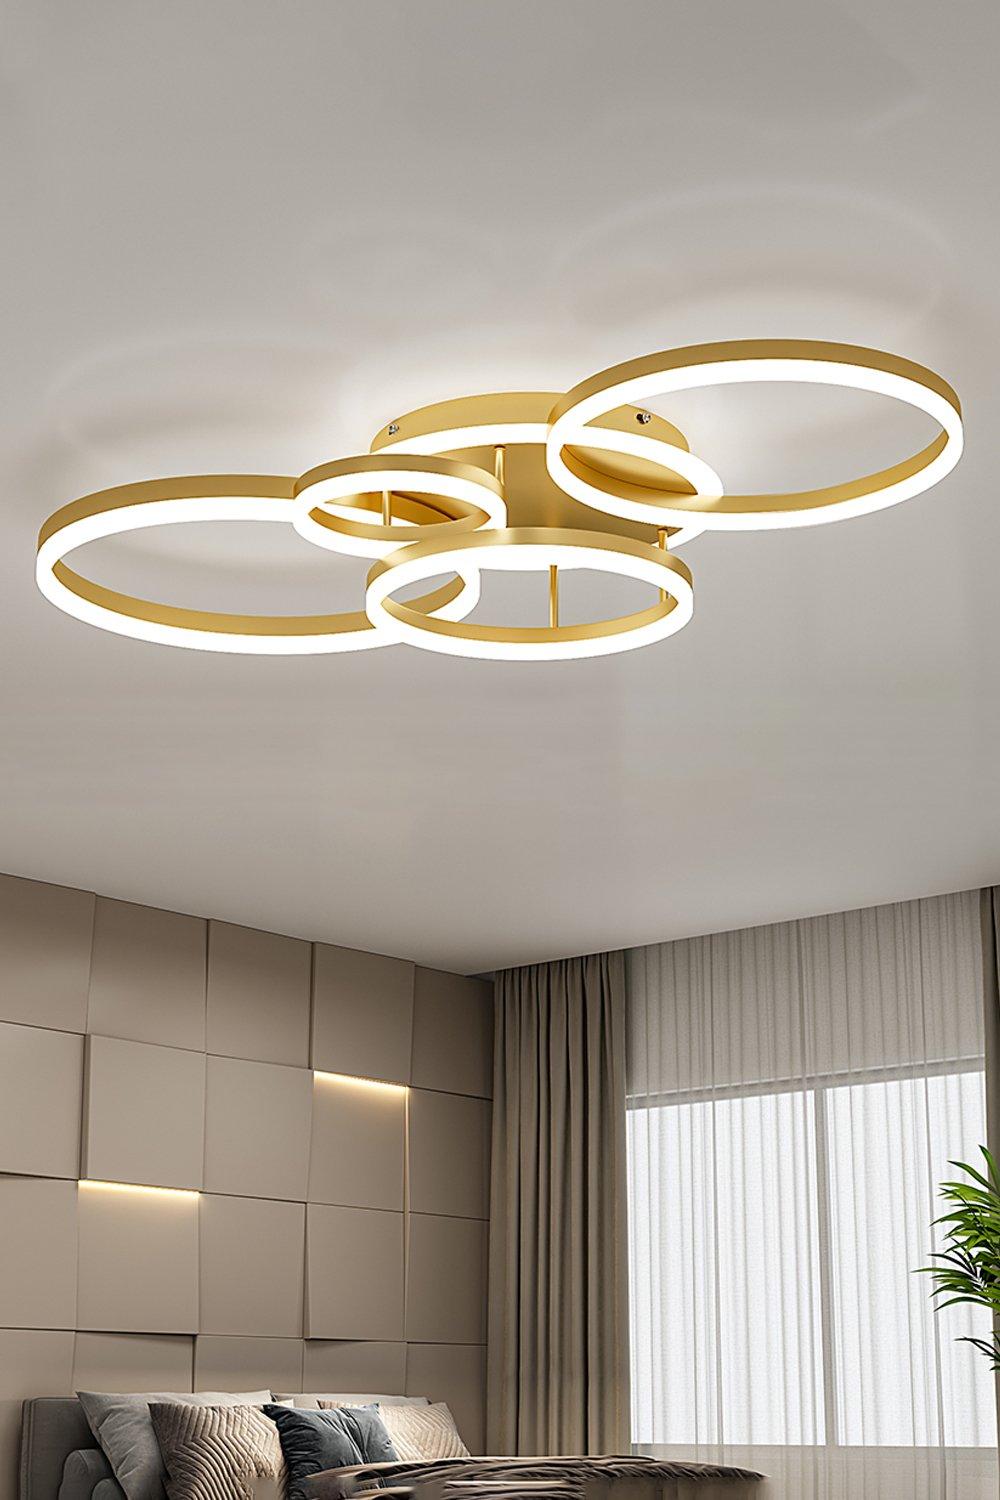 Golden Round LED Ceiling Light 5 Overlapping Circles Cool White Light